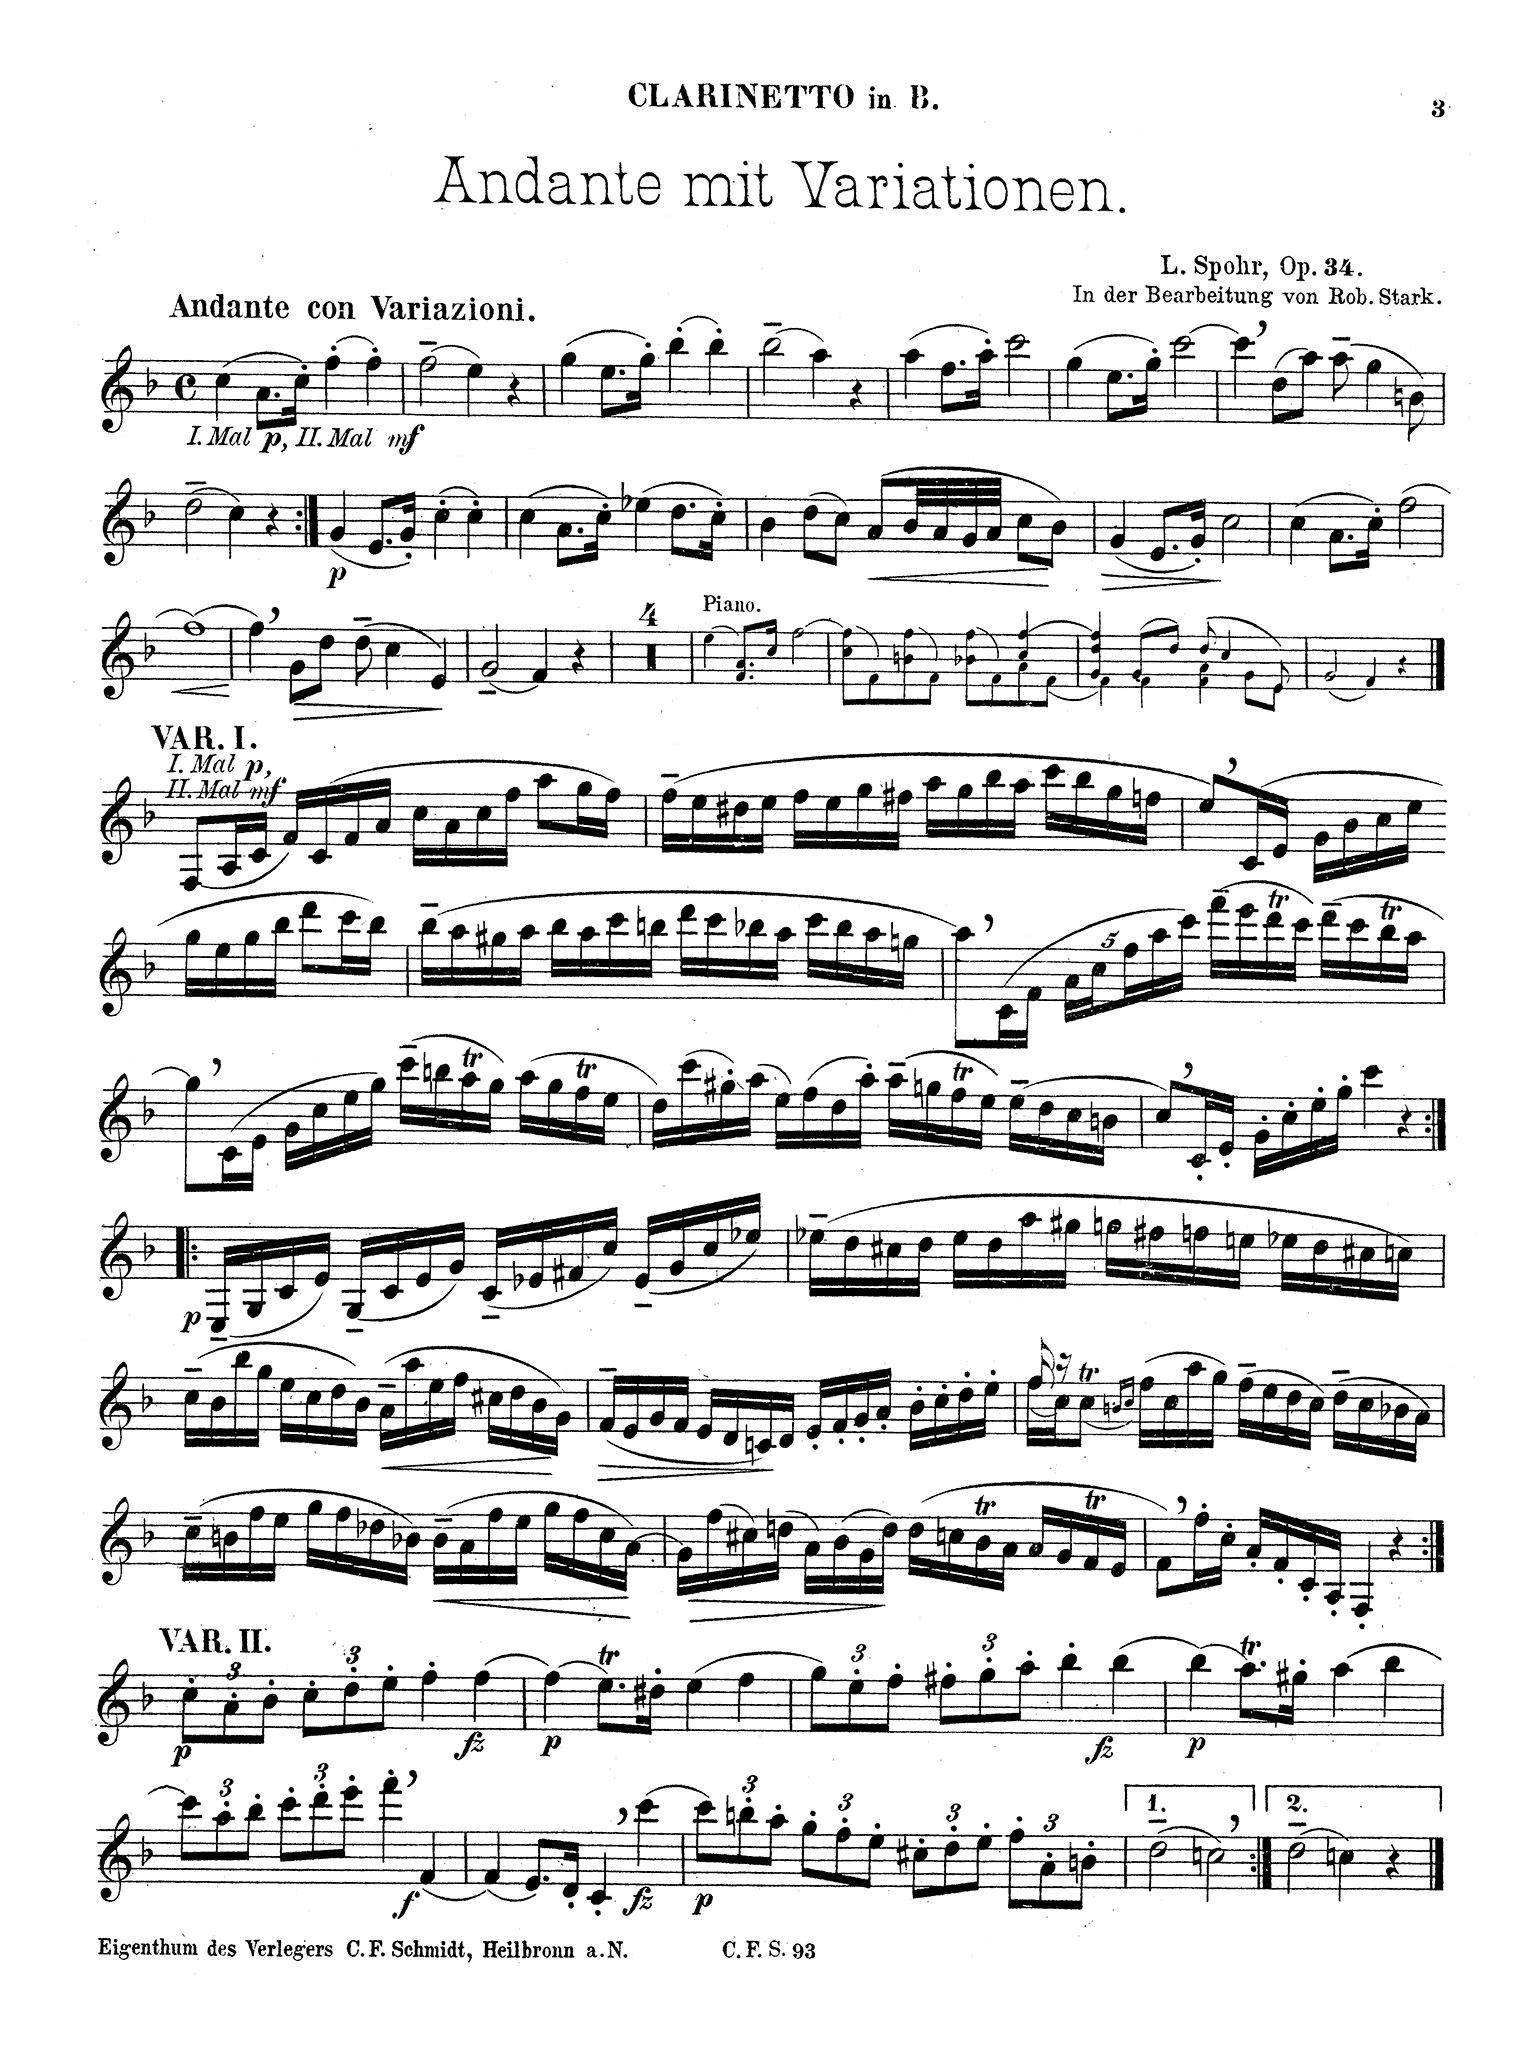 Spohr Andante mit Variationen (Nocturne), Op. 34 clarinet and piano arrangement solo part